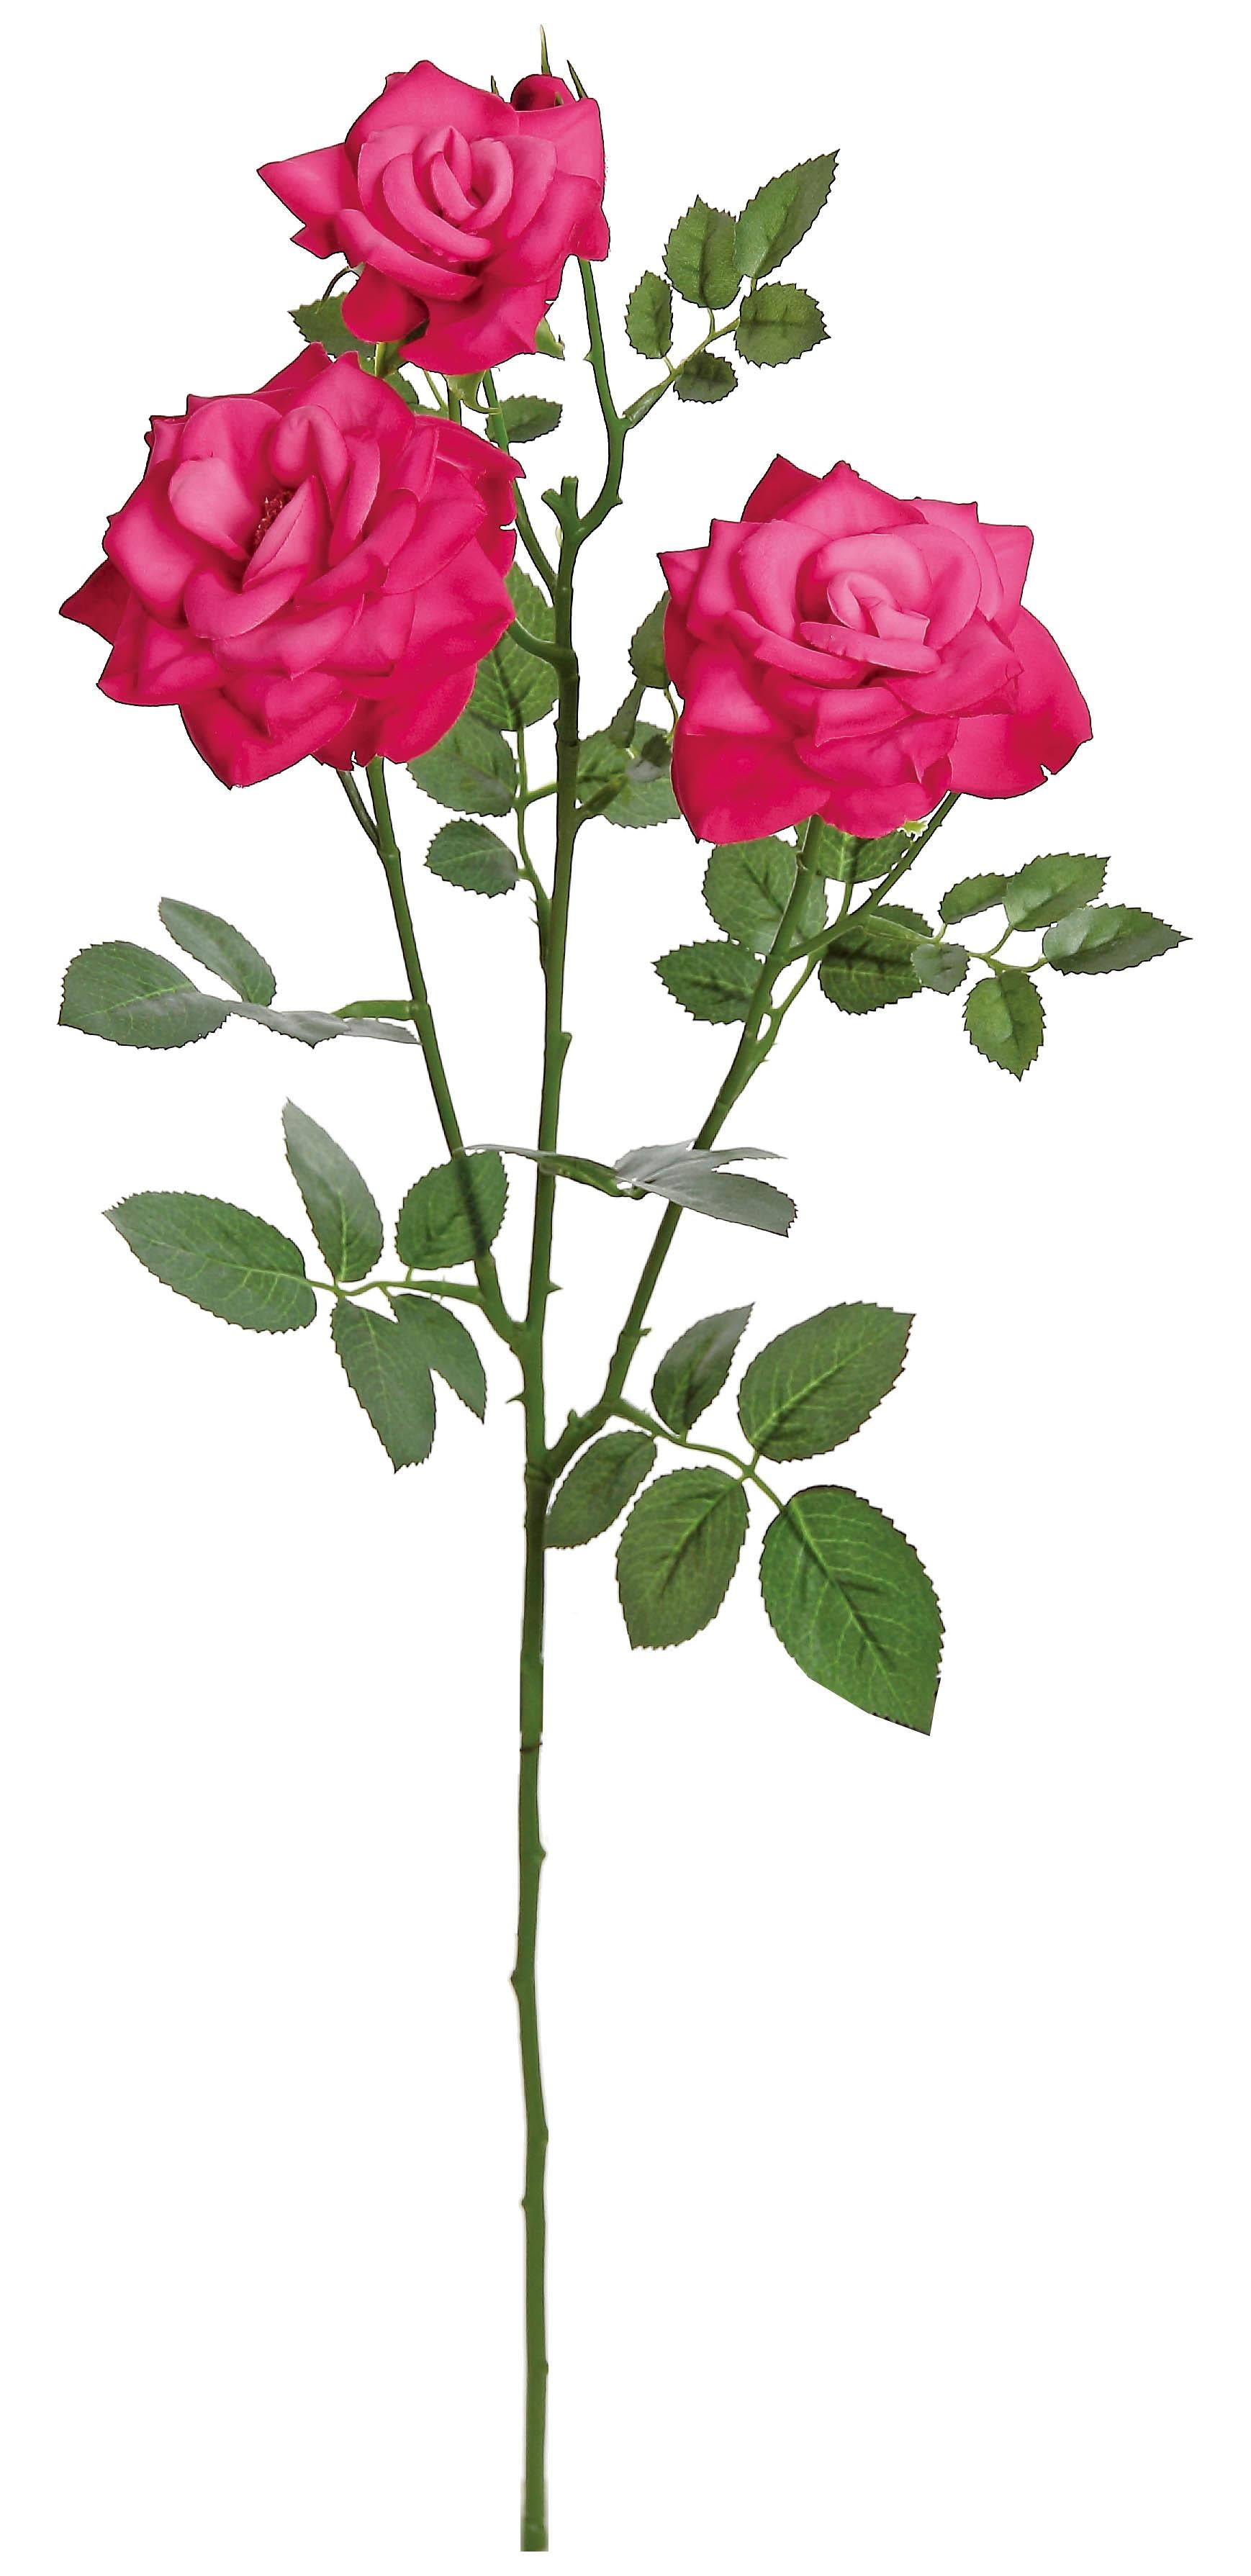 24" Curled Garden Rose HotPink